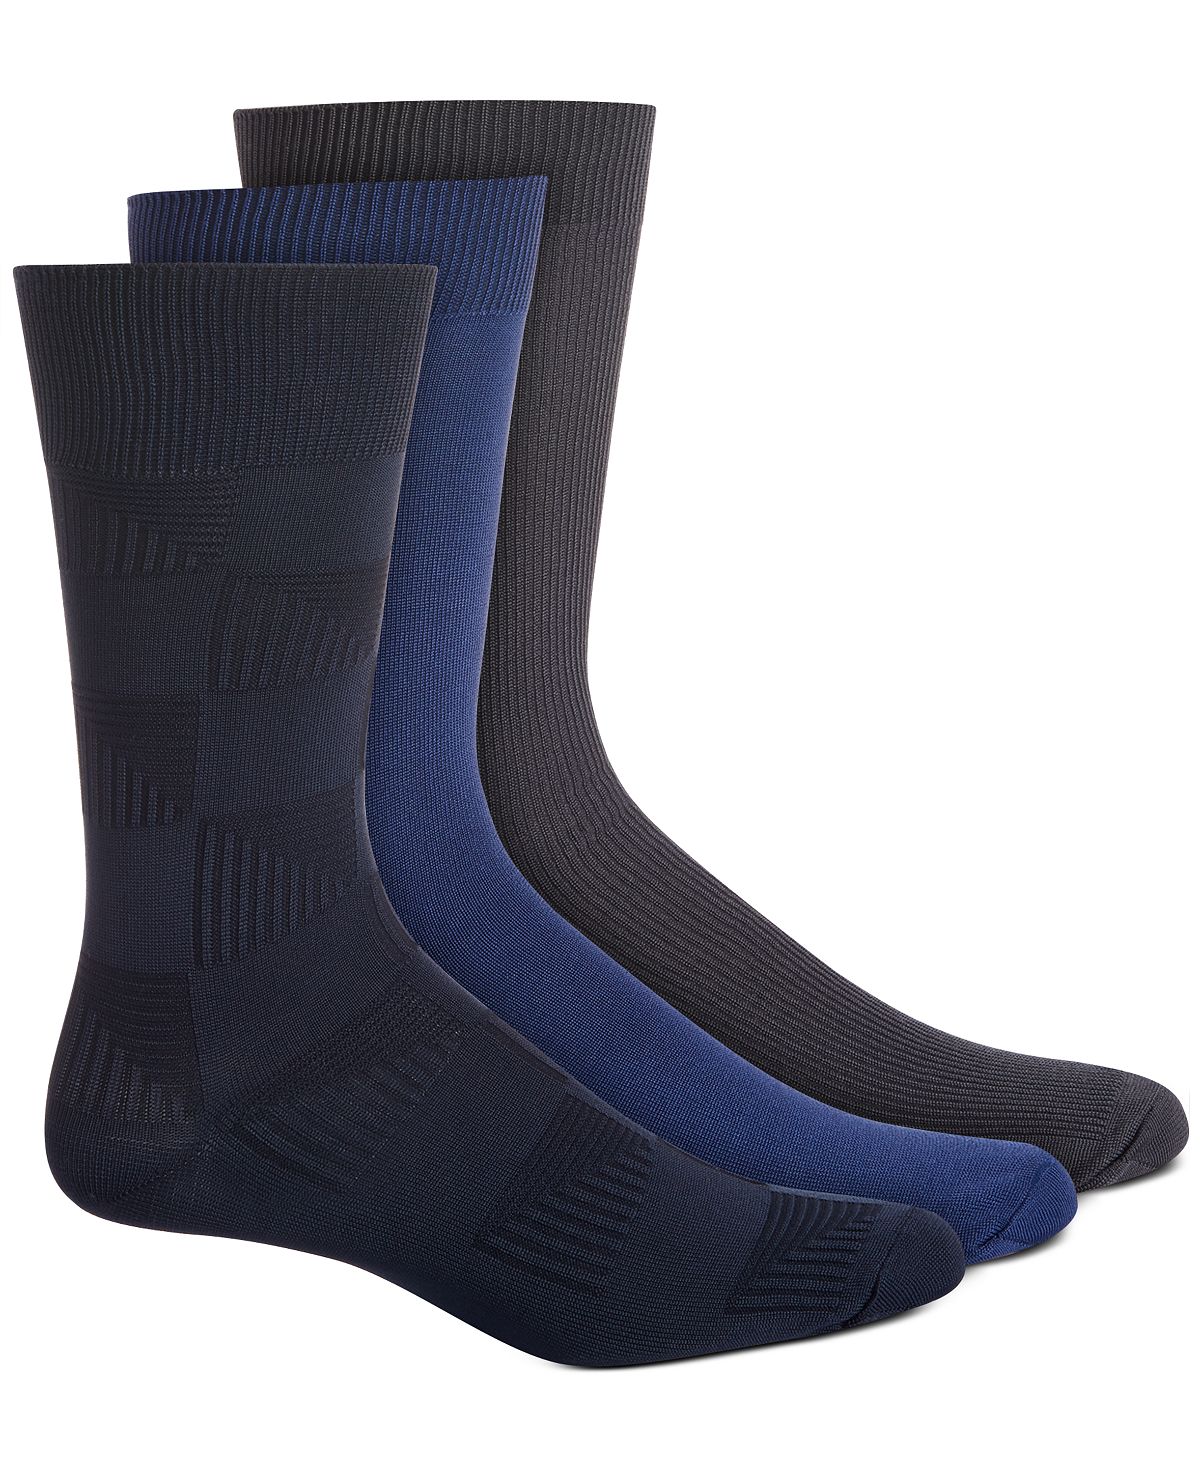 Perry Ellis 3-pk. Microfiber Socks Navy/new Cobalt/black